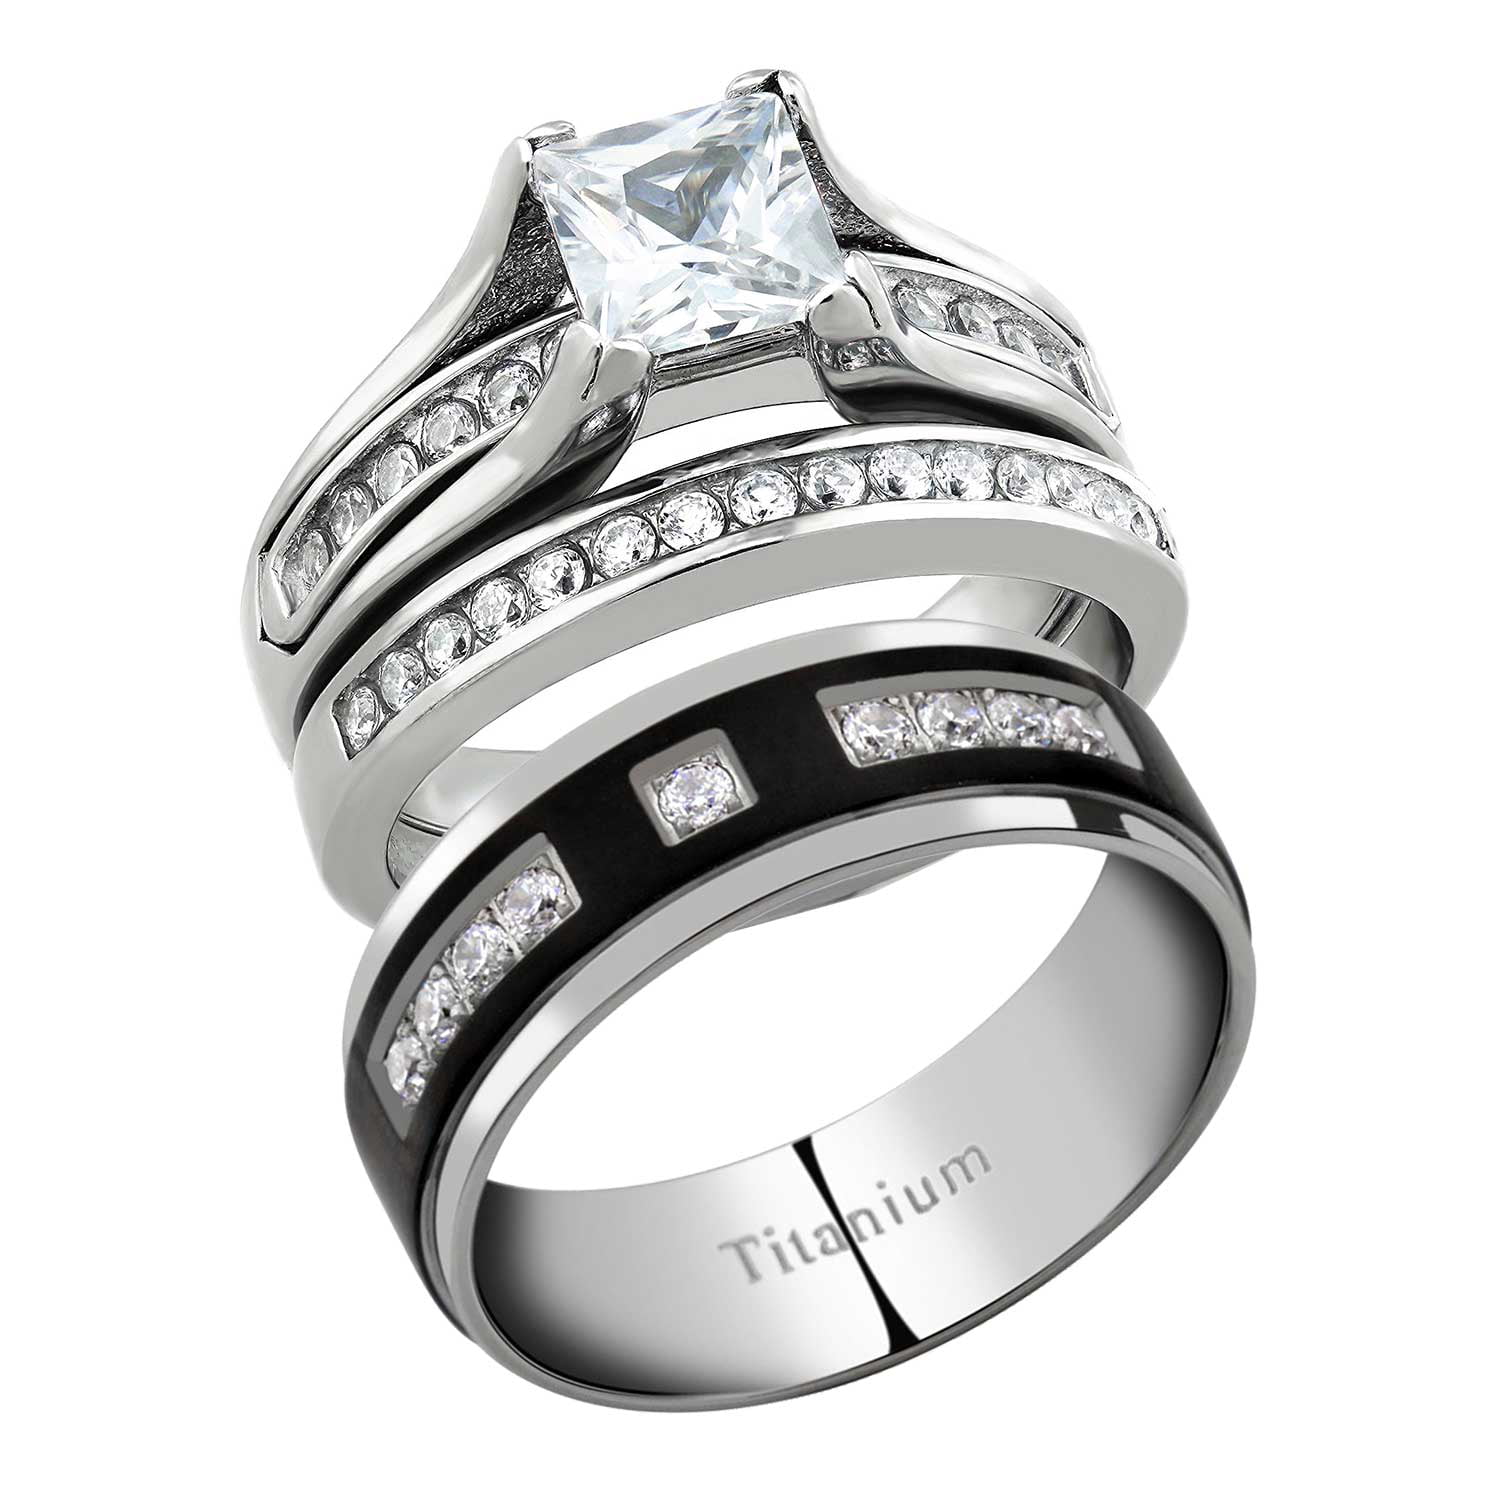 Womens Silver 1.5 Carat Princess Cut Wedding Ring Set w/ Matching Band Size 5-9 